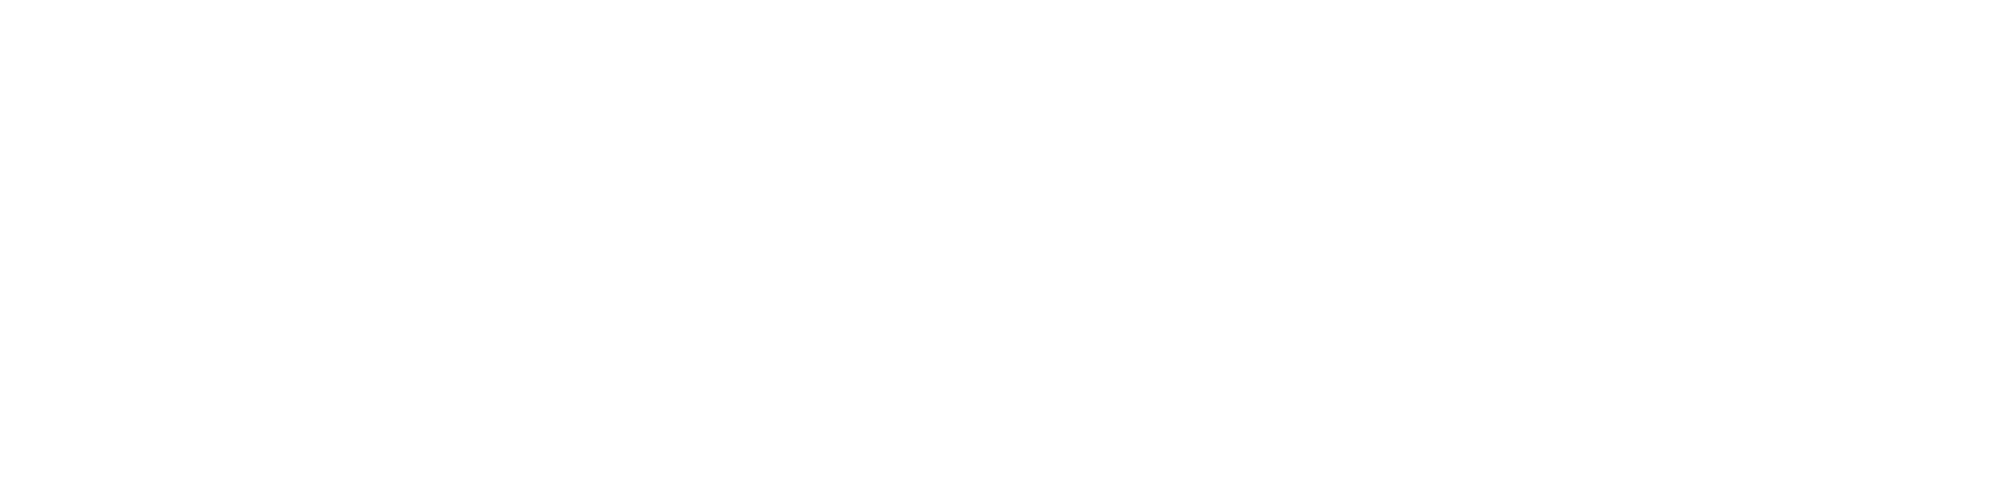 Canadian-chamber-of-commerce-logo-white-2